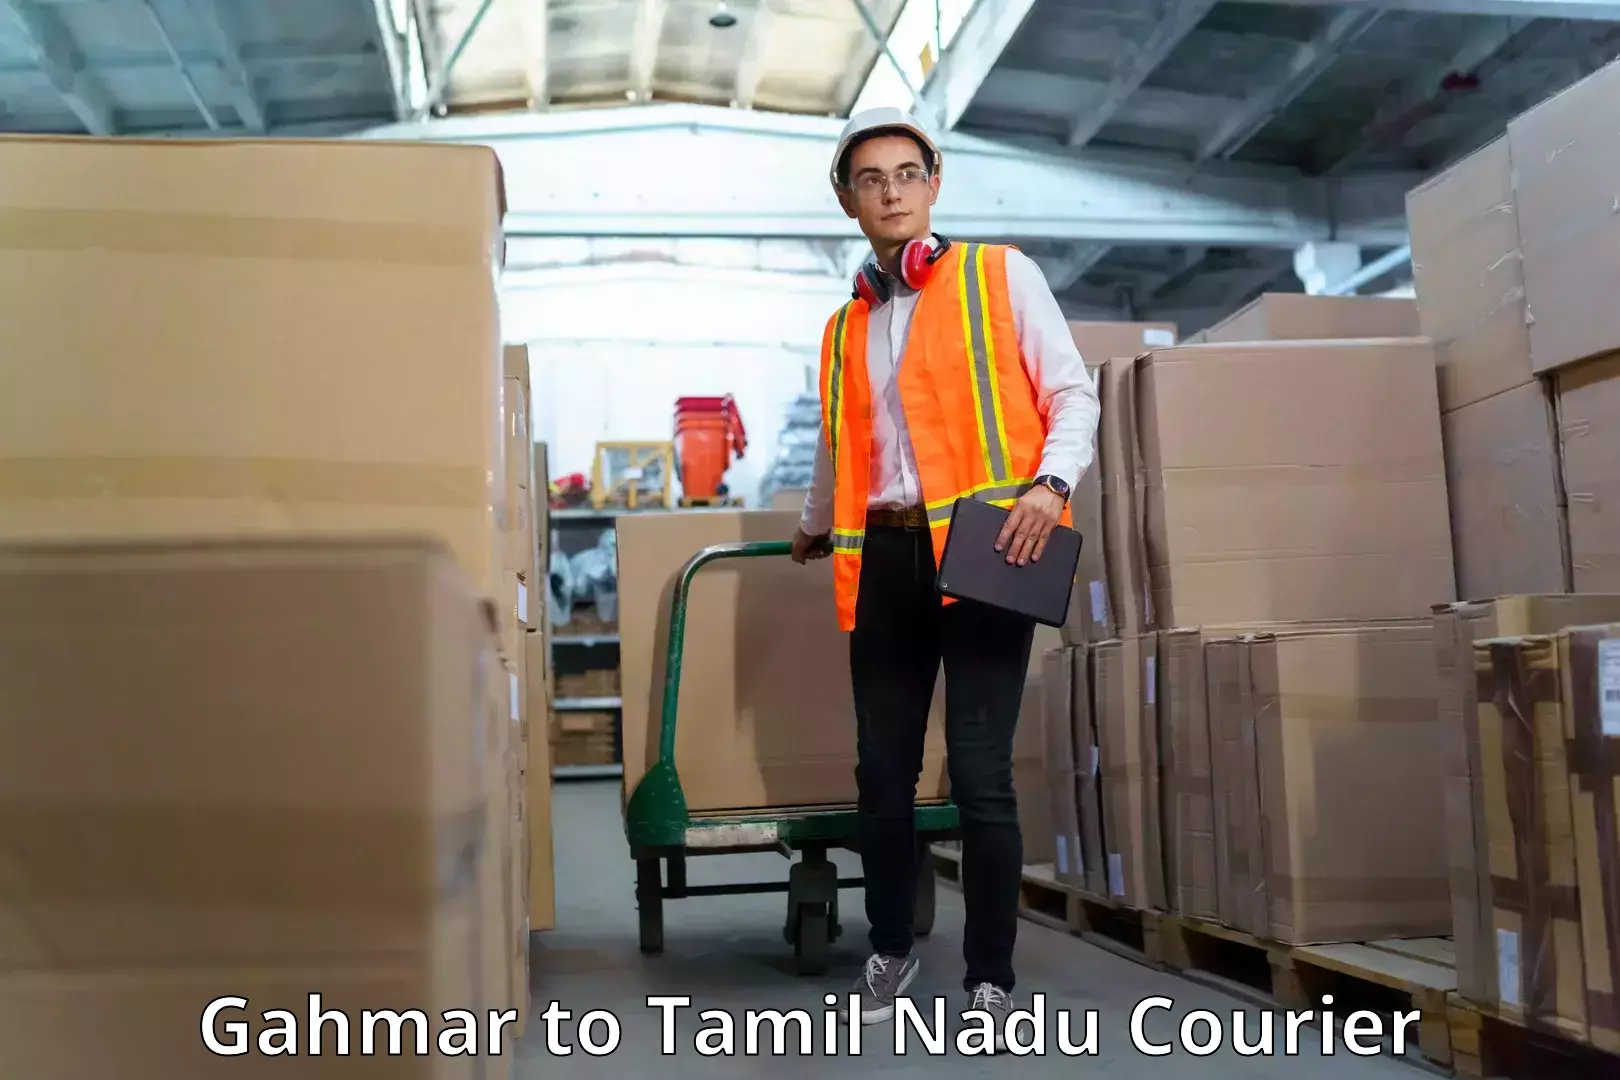 Lightweight courier Gahmar to Chennai Port